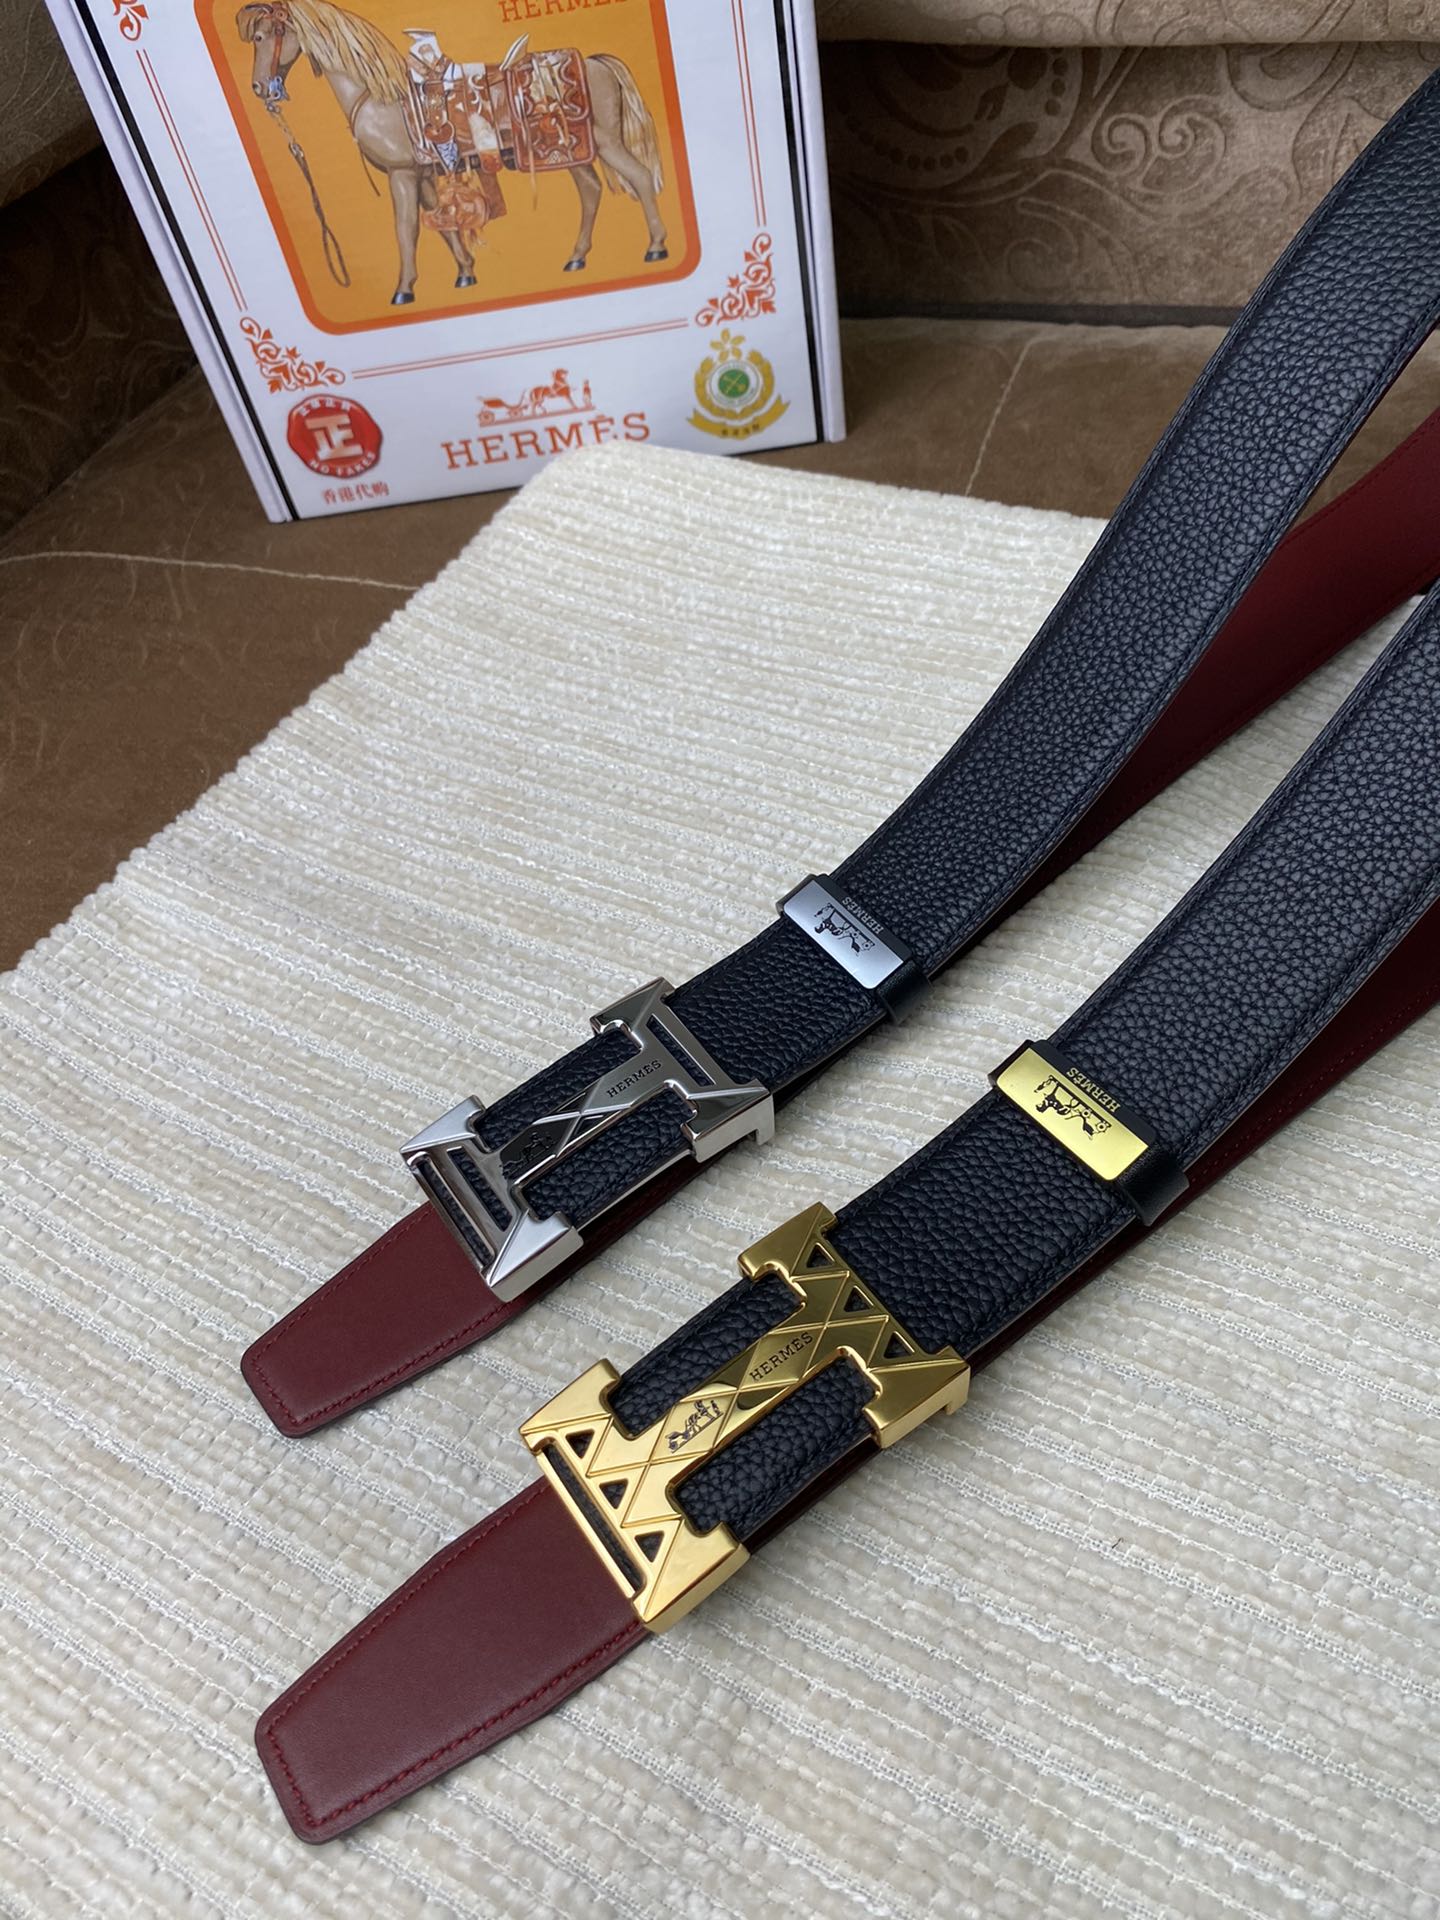 1:1
 Hermes Belts Cheap Replica
 Steel Buckle Cowhide Genuine Leather Fashion